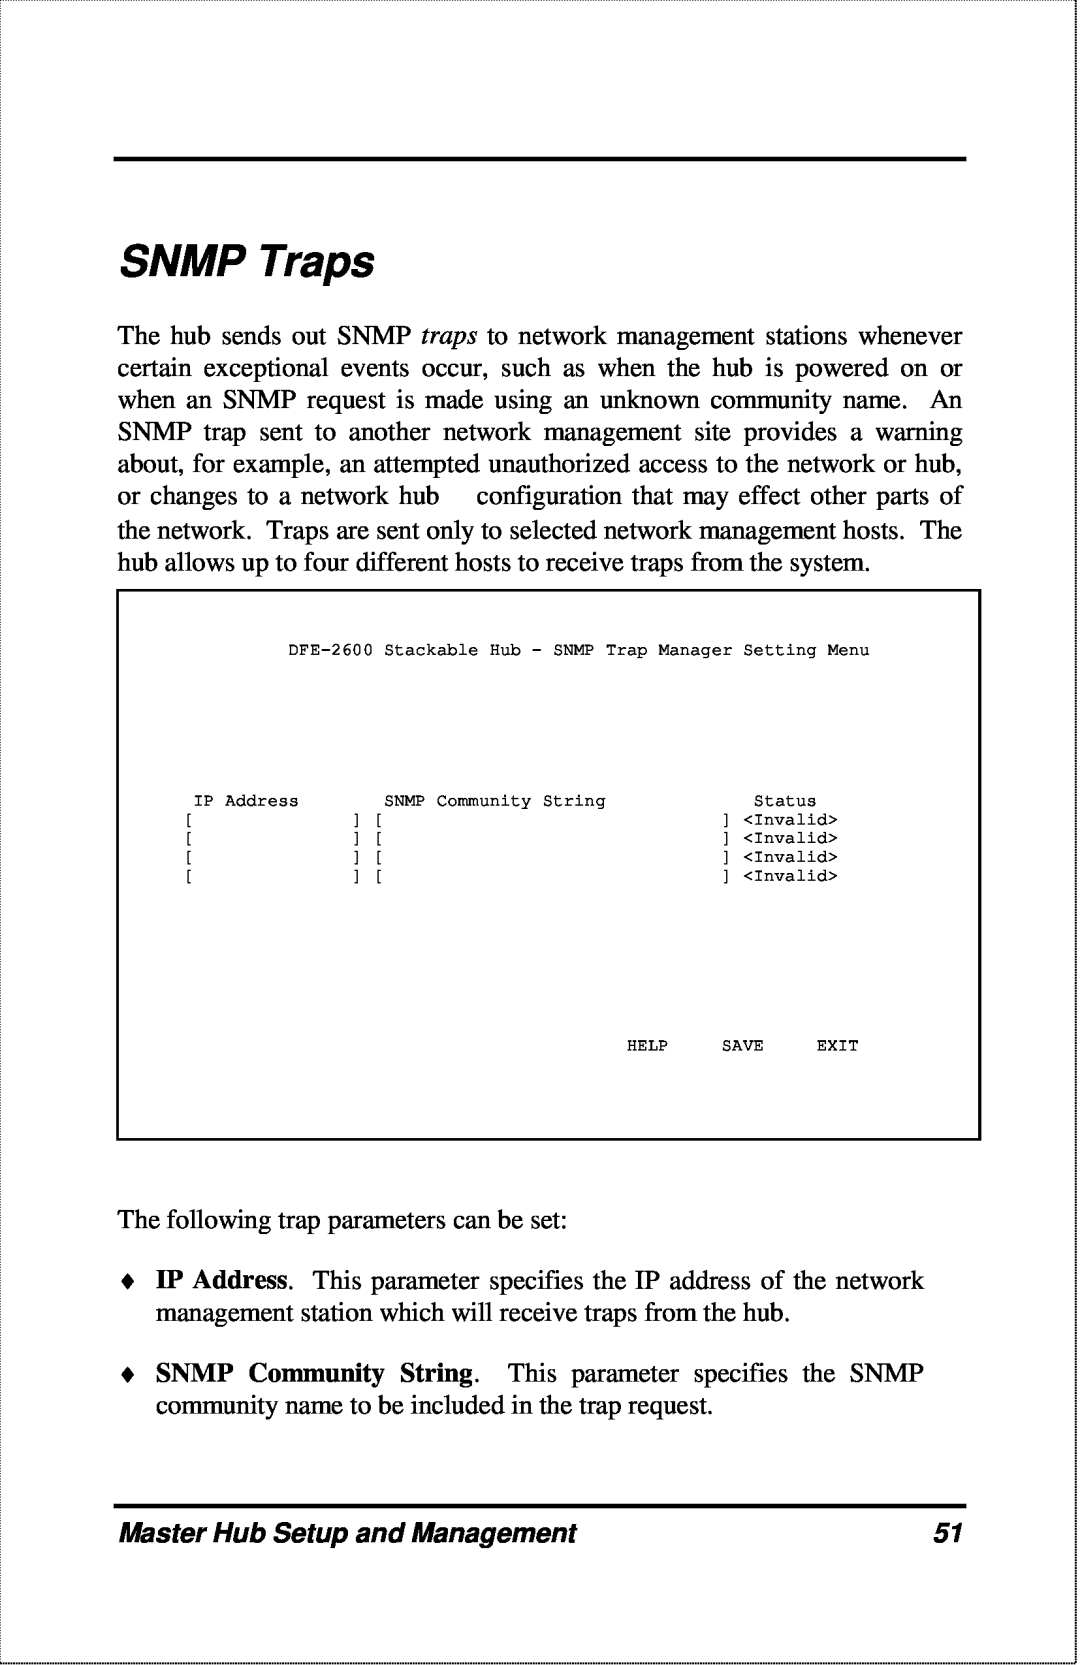 D-Link DFE-2600 manual SNMP Traps, Master Hub Setup and Management 